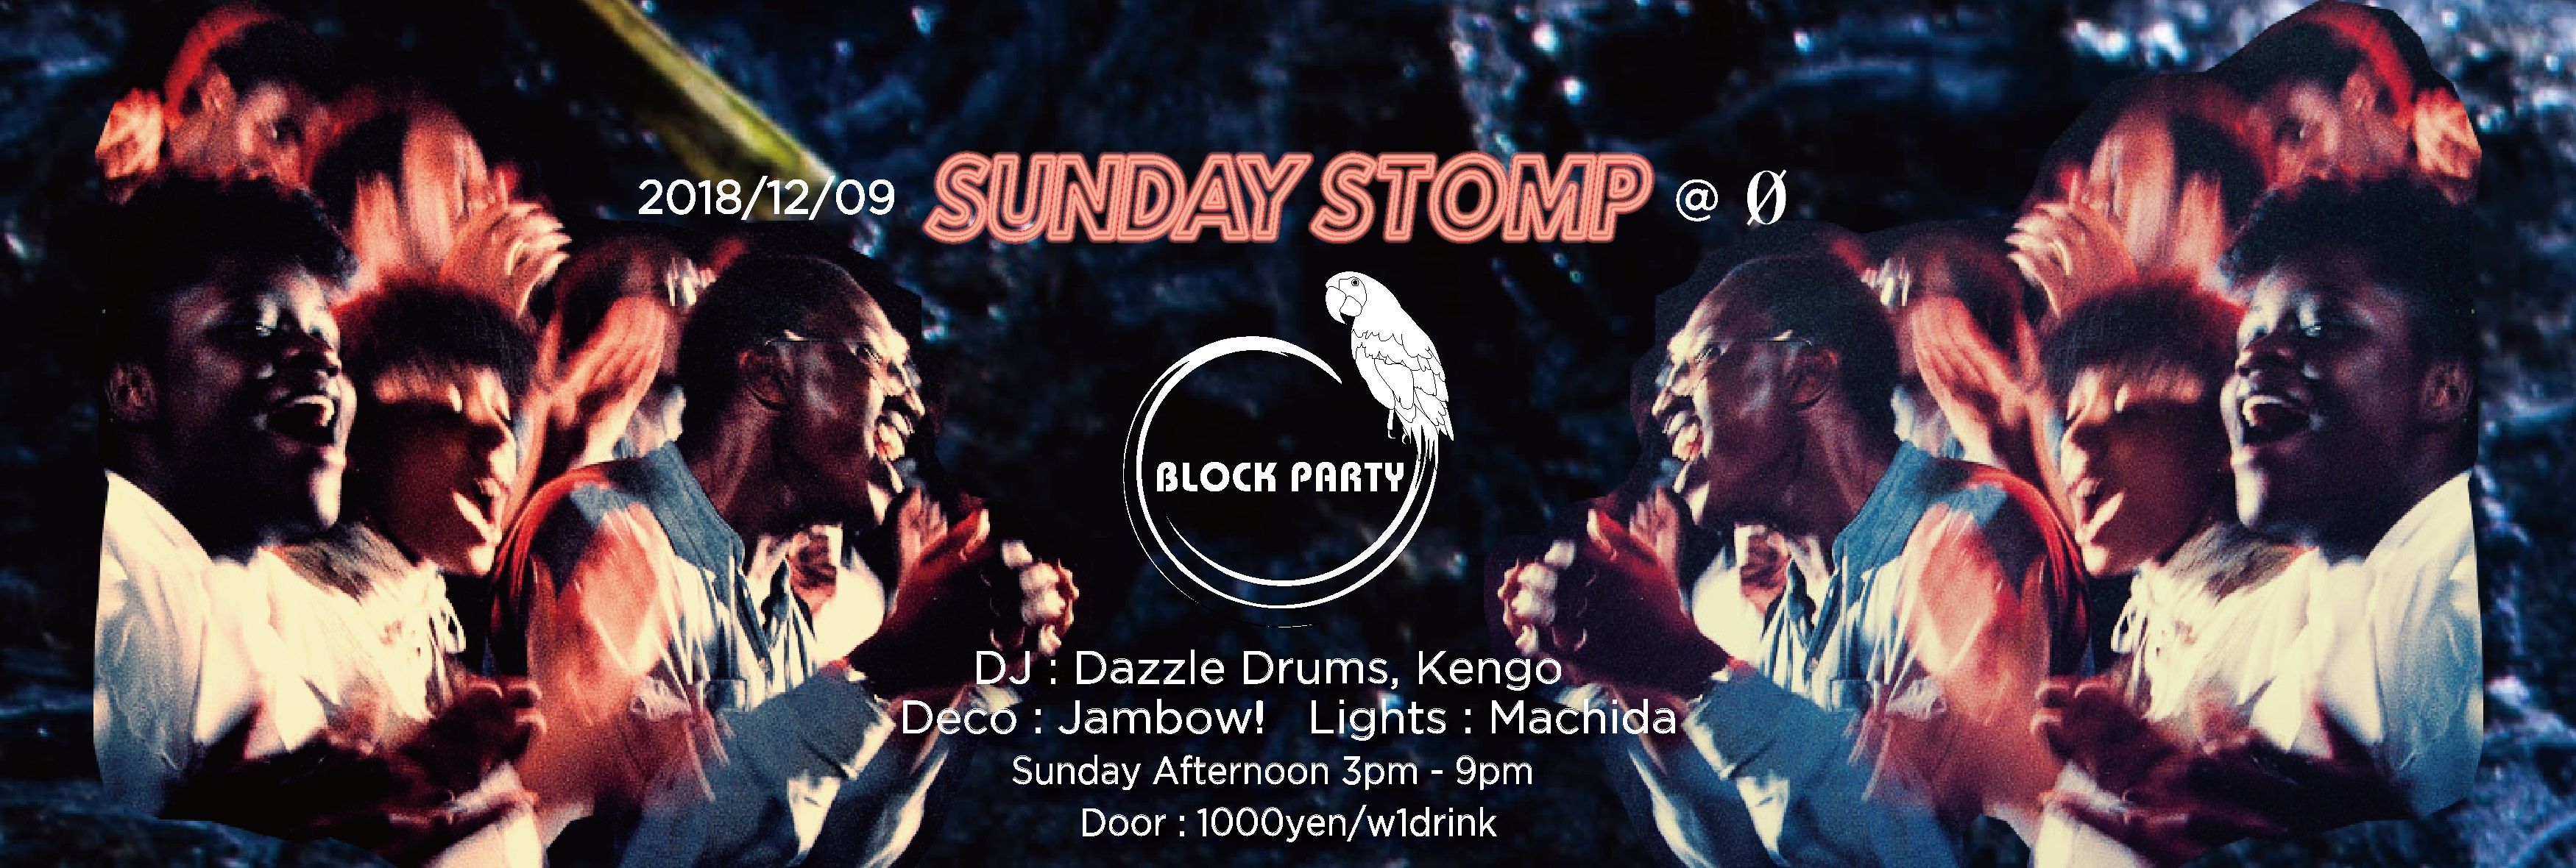 Block Party "Sunday Stomp"